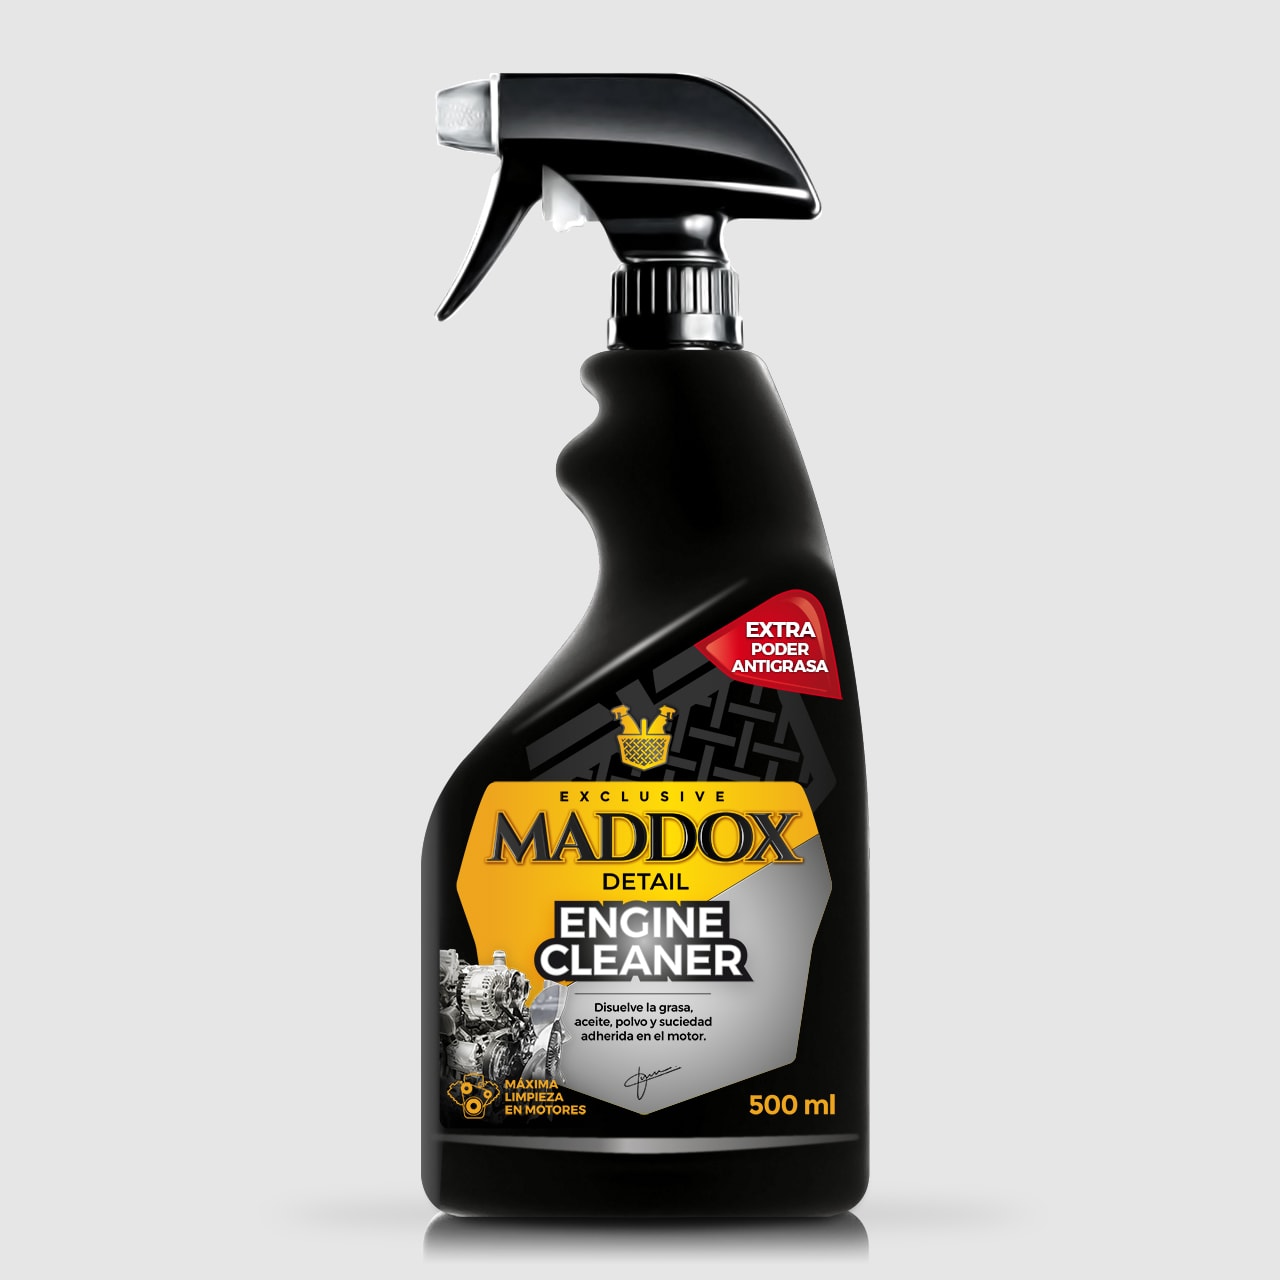 ENGINE CLEANER – Maddox Detail